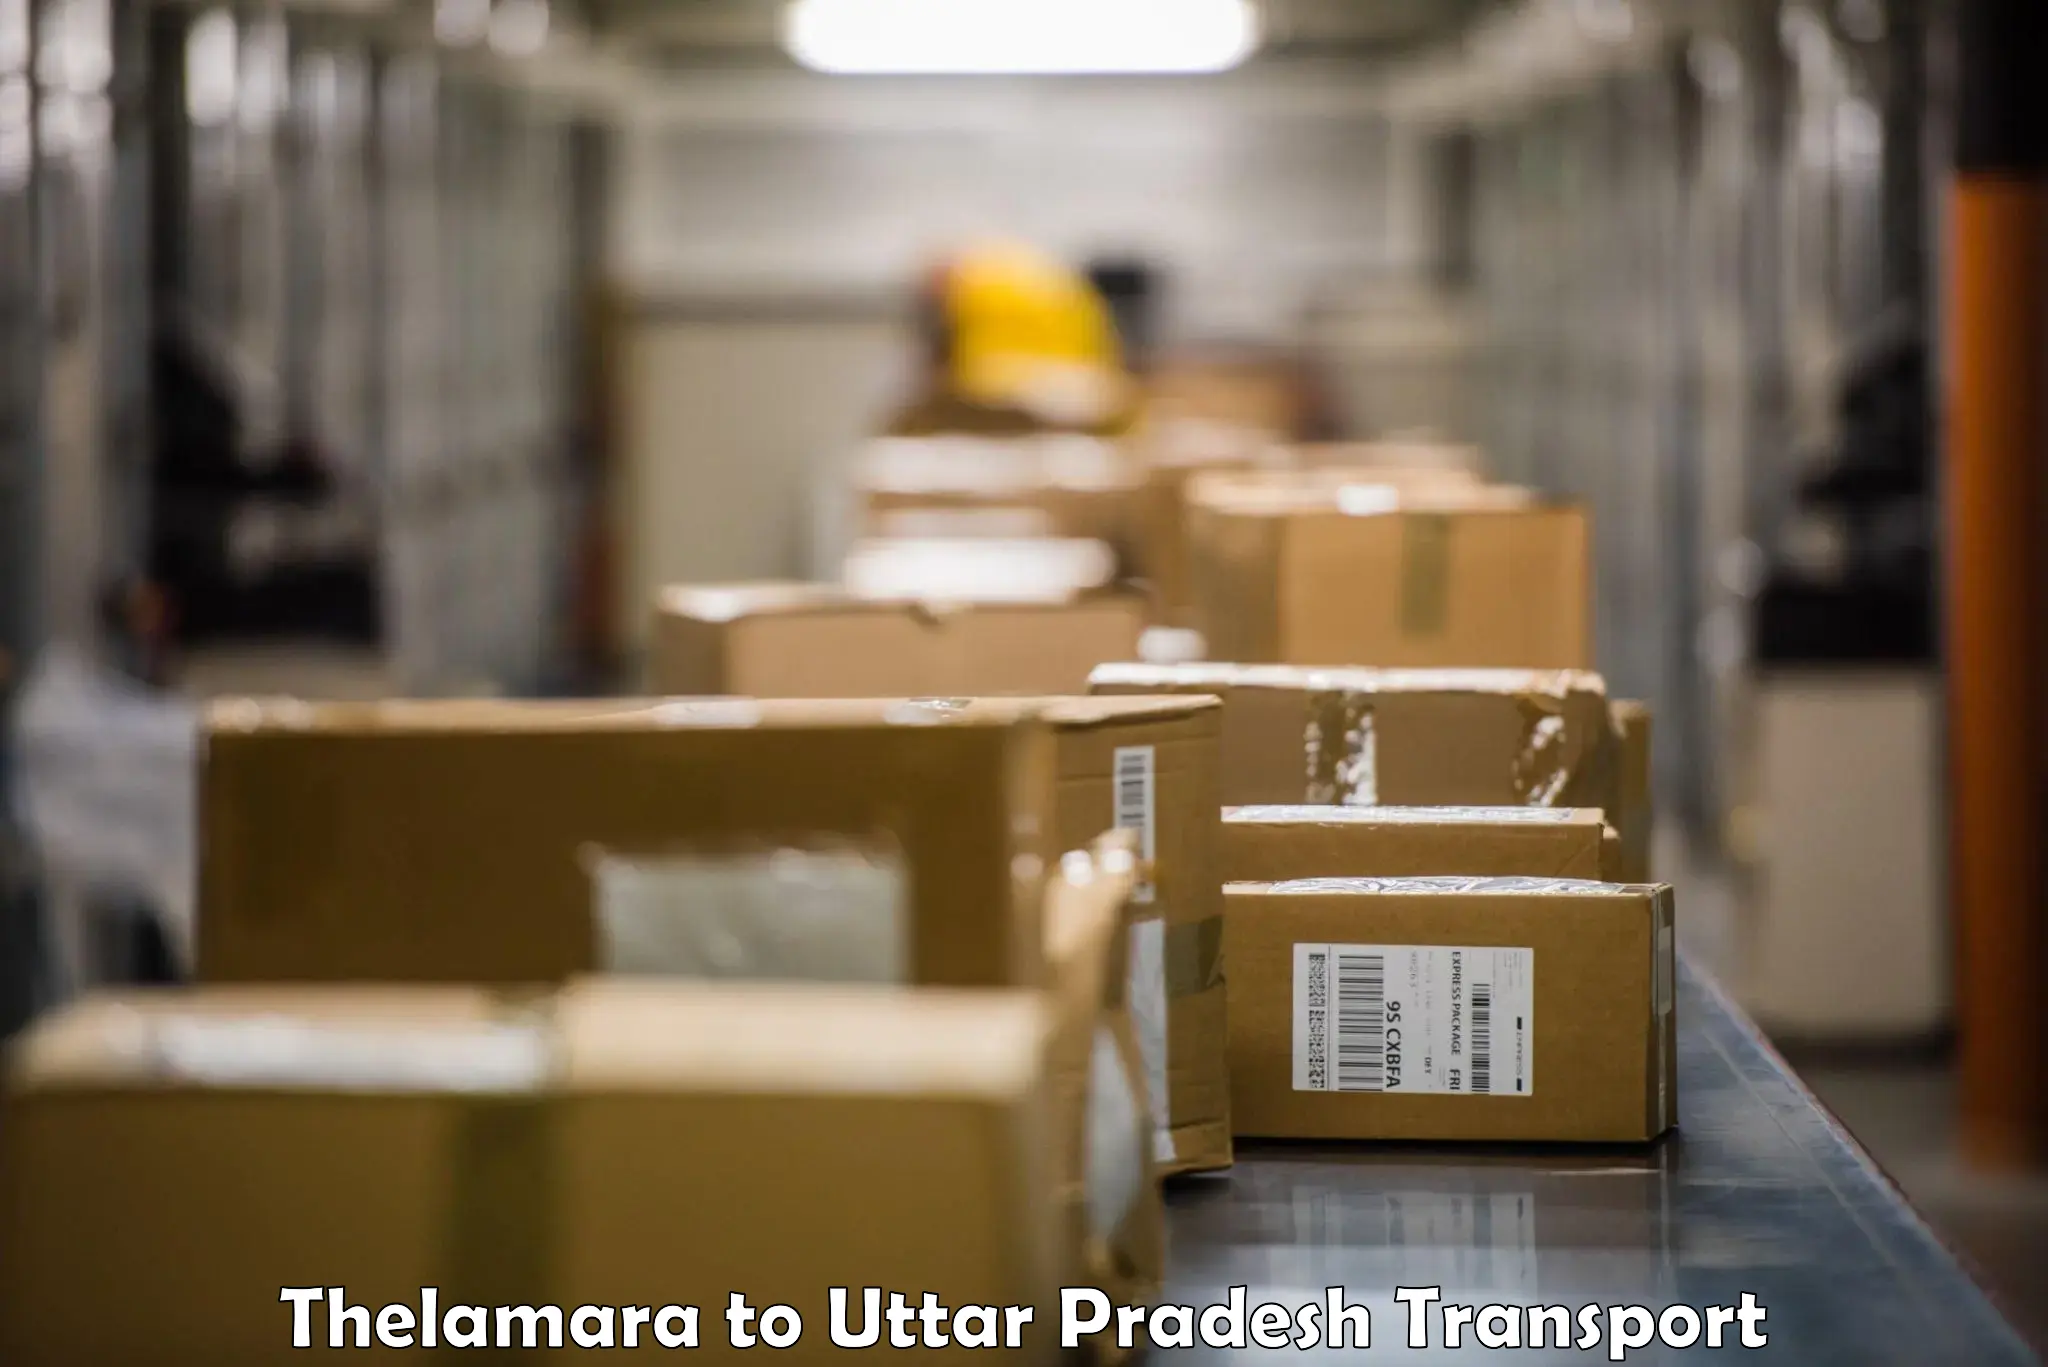 Truck transport companies in India Thelamara to Bakewar